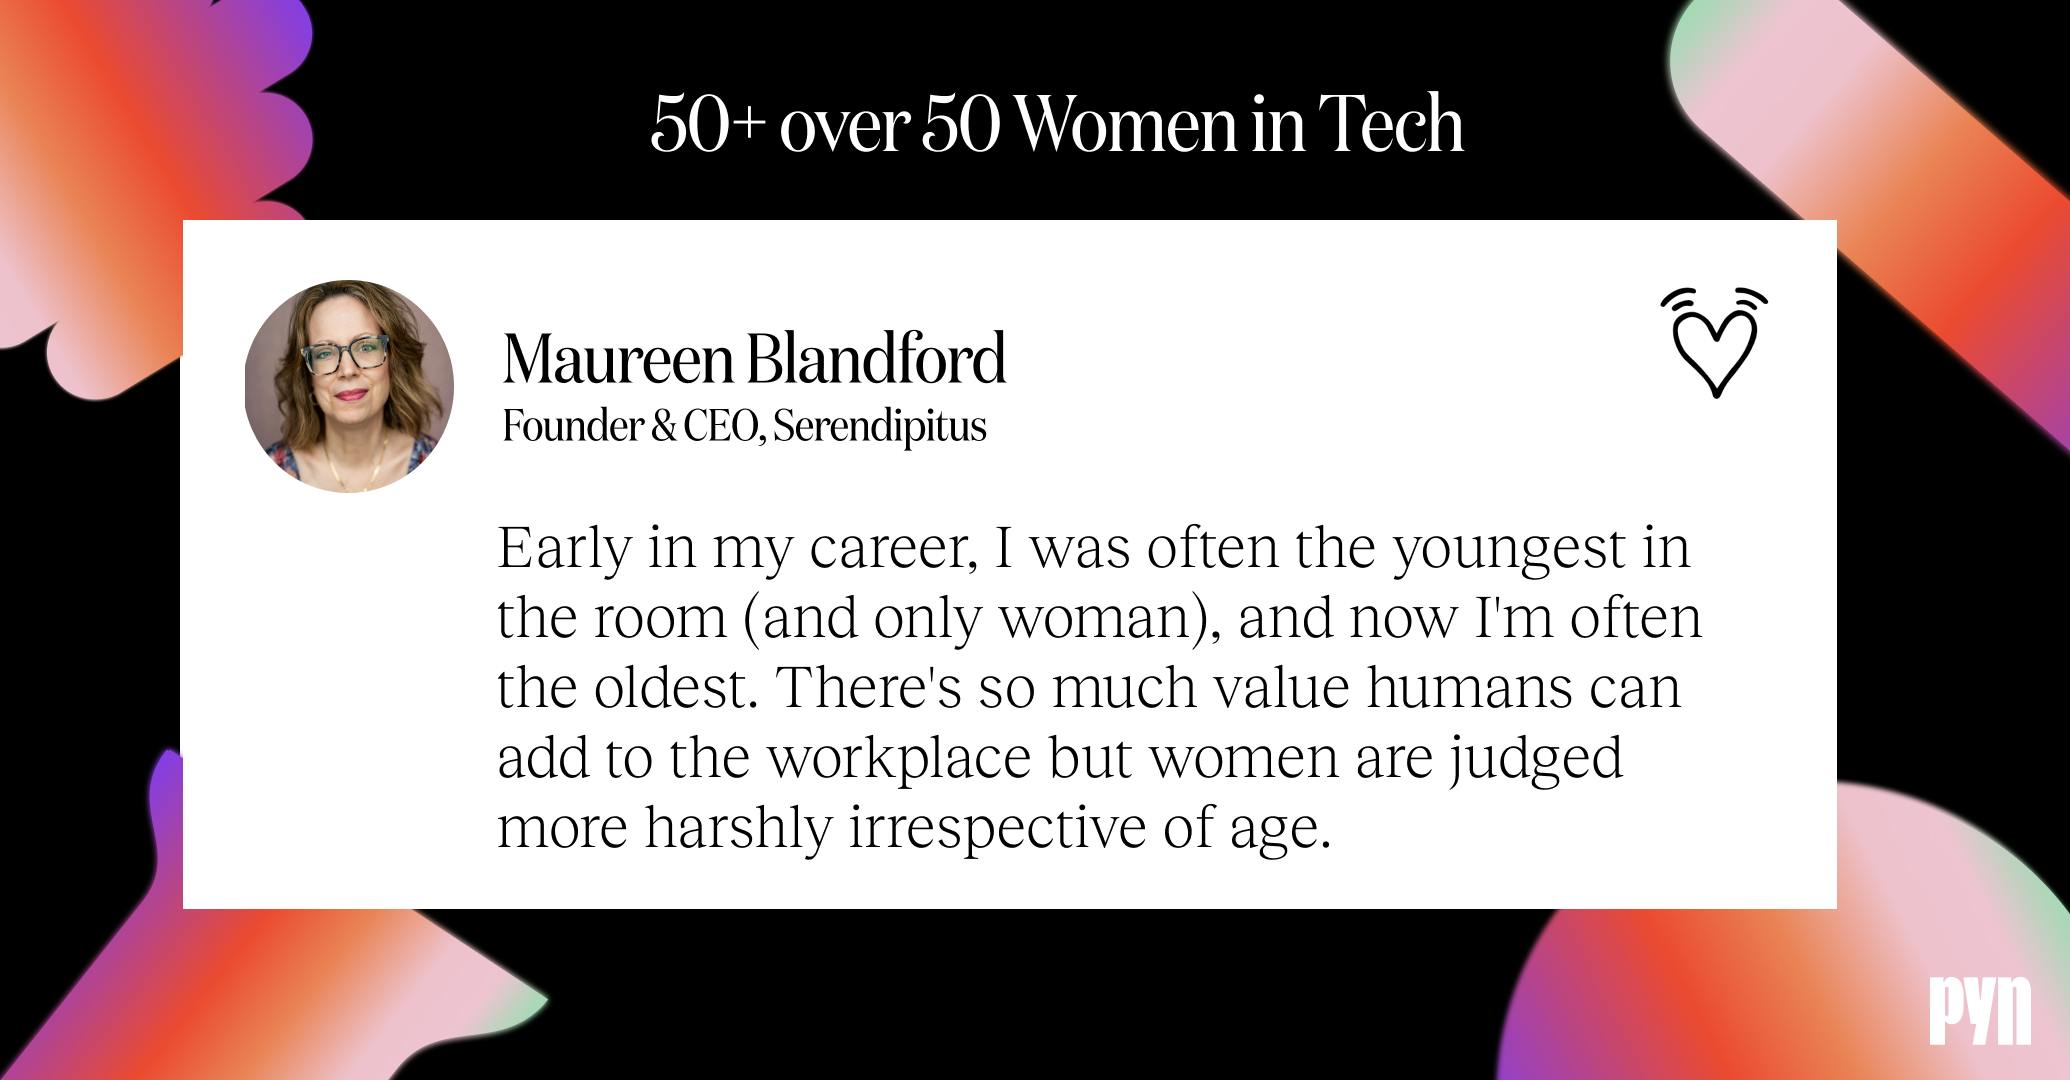 Maureen Blandford